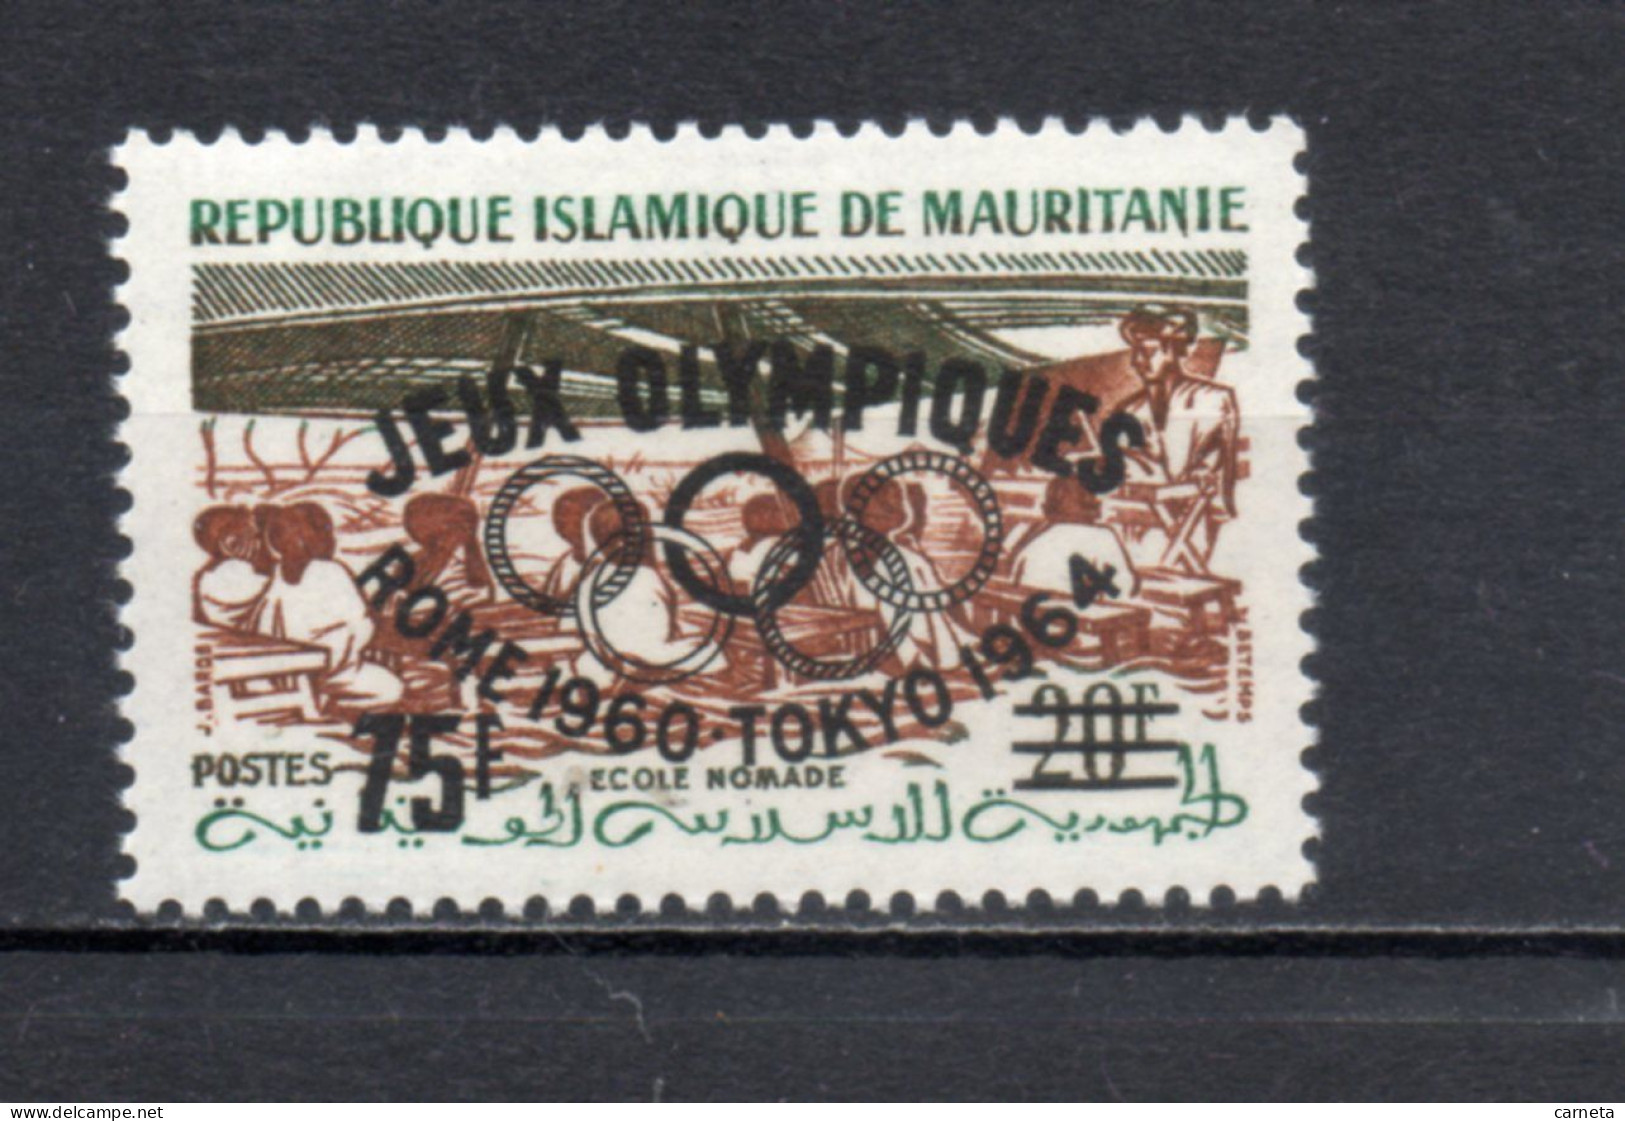 MAURITANIE  N° 154D   NEUF SANS CHARNIERE   COTE 10.50€    ECOLE NOMADE JEUX OLYMPIQUES TOKYO - Mauritania (1960-...)